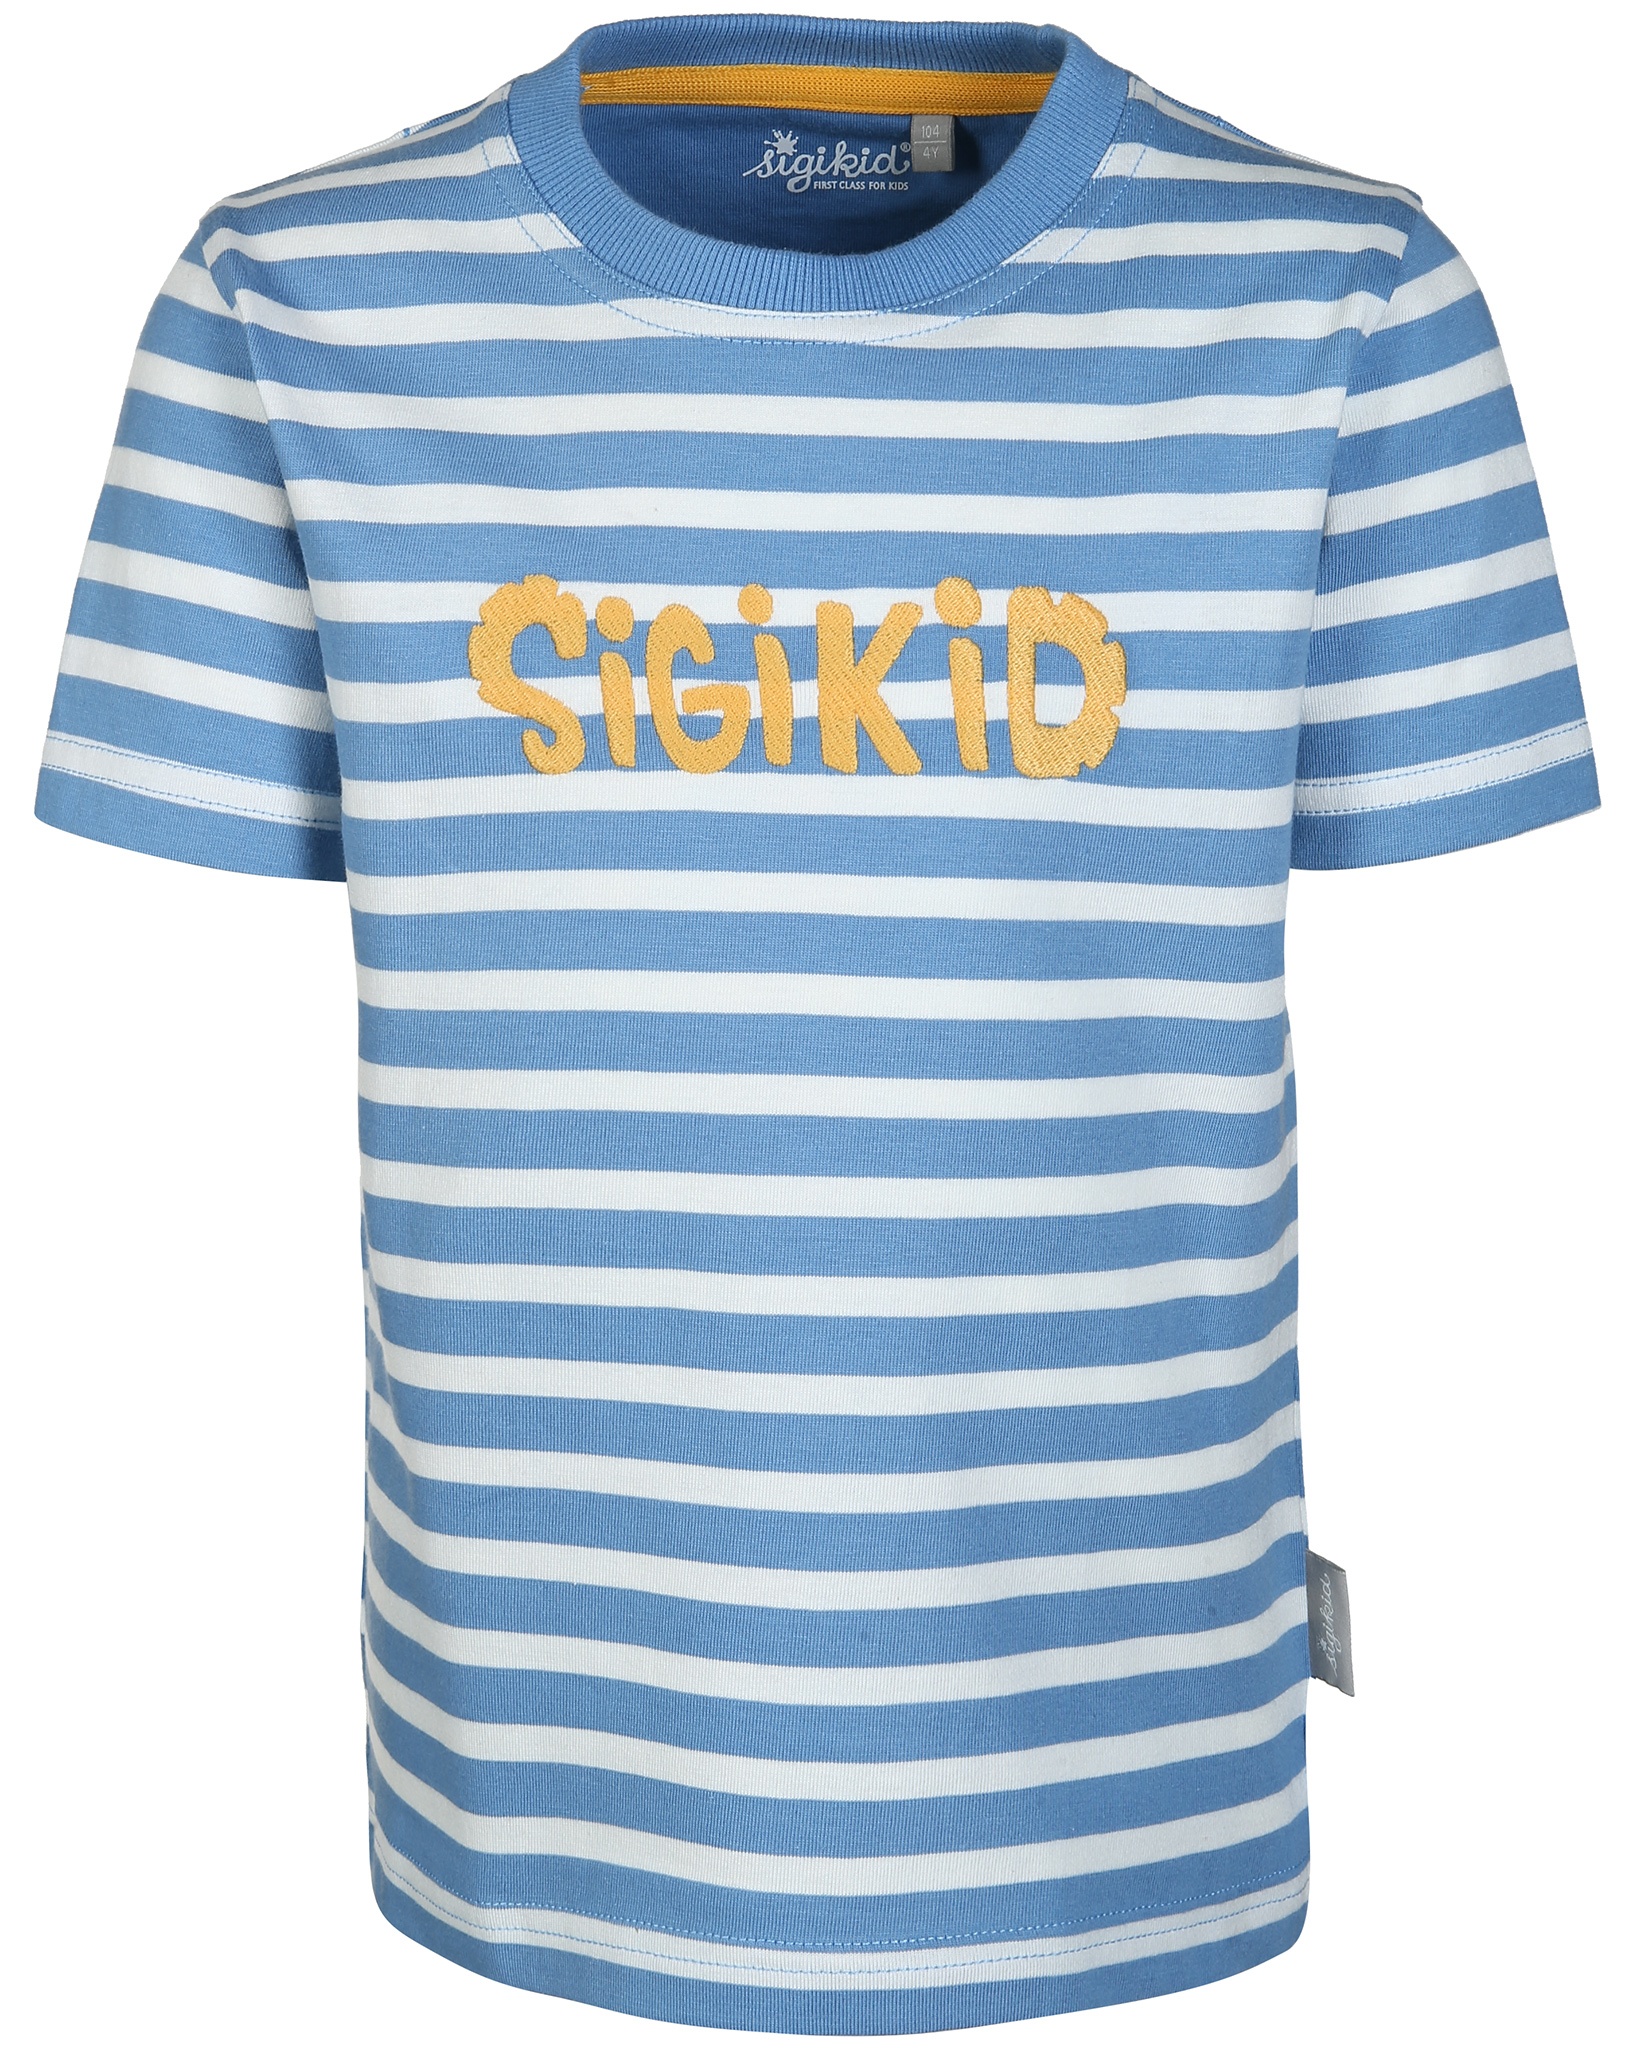 Sigikid - T-Shirt SIGIKID gestreift in blau/weiß, Gr.116